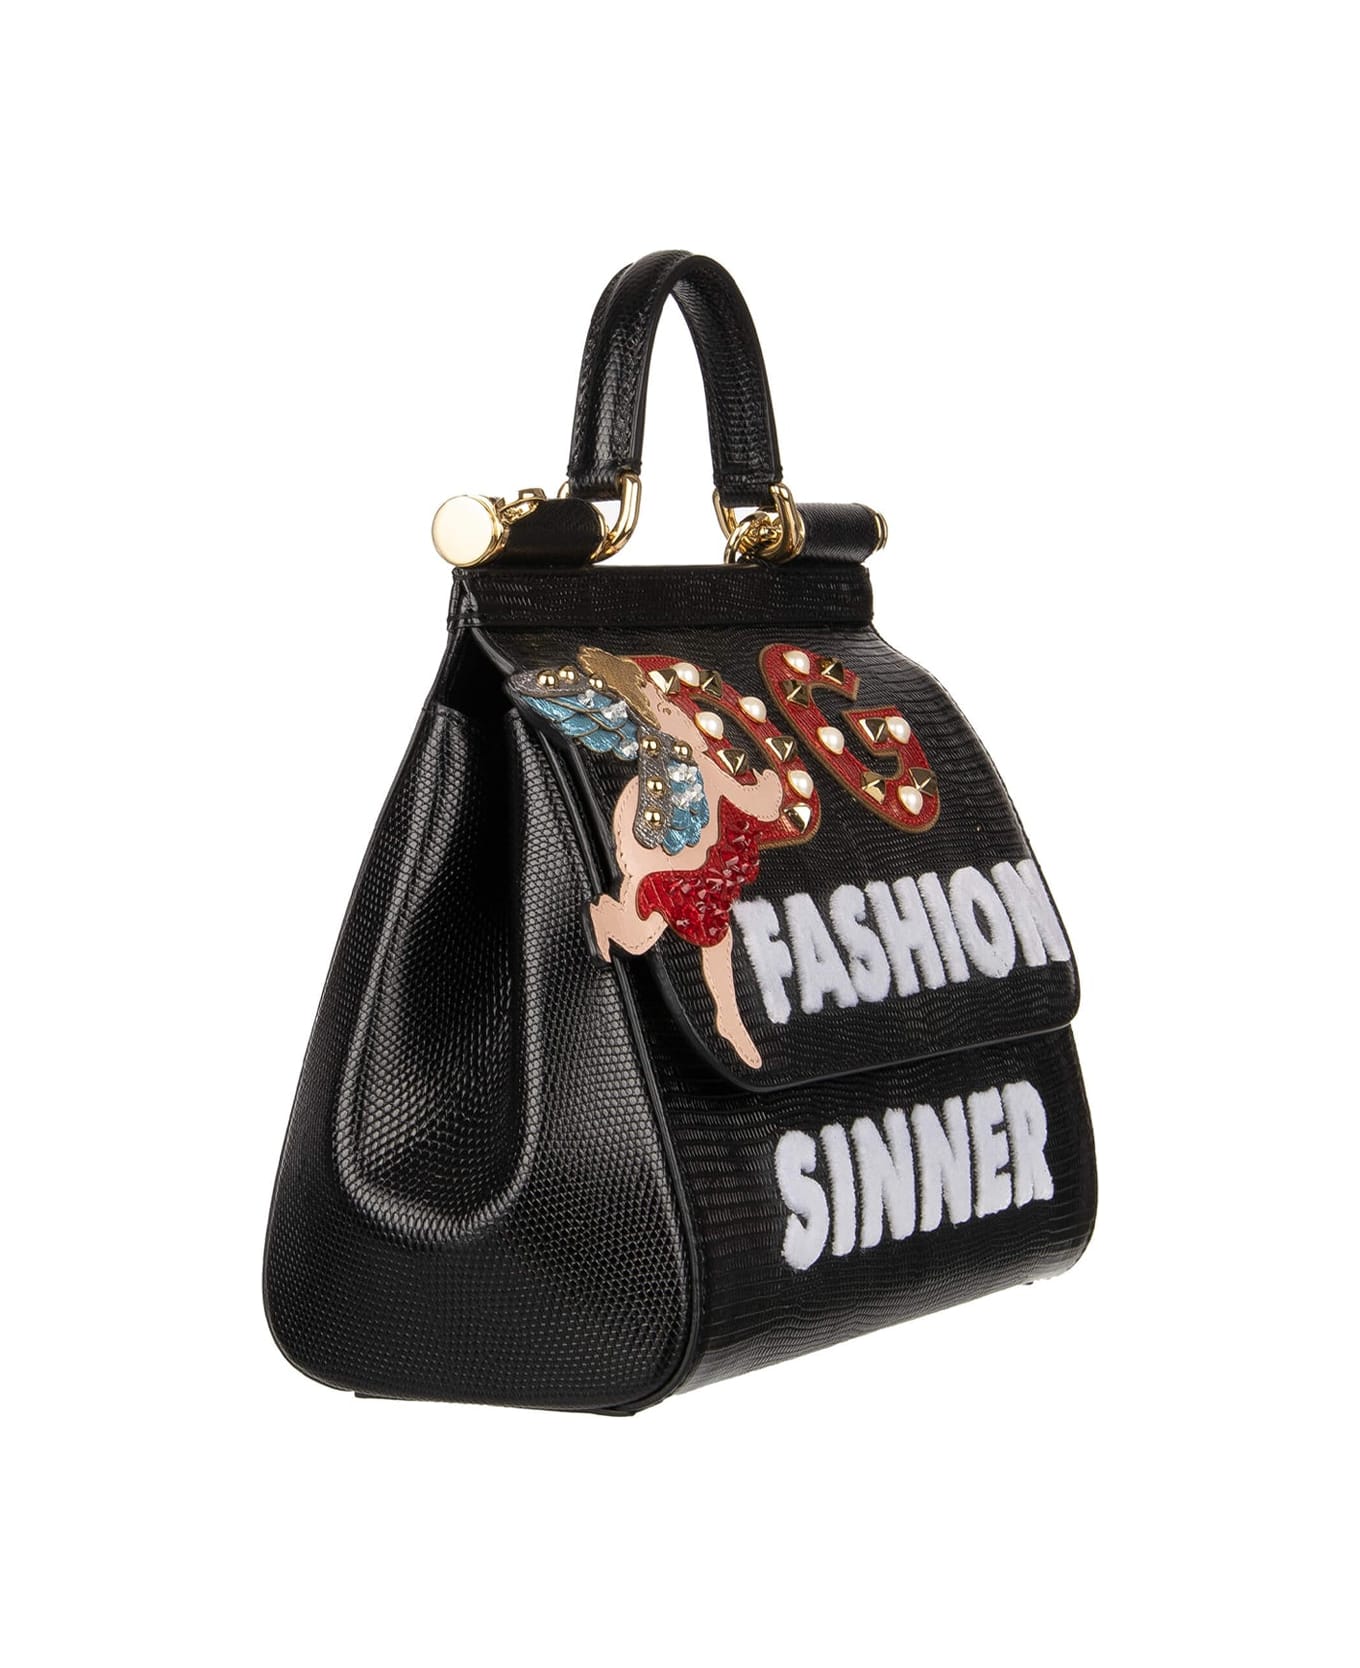 Dolce & Gabbana Fashion Sinner Angel Sicily Bag - Black トートバッグ